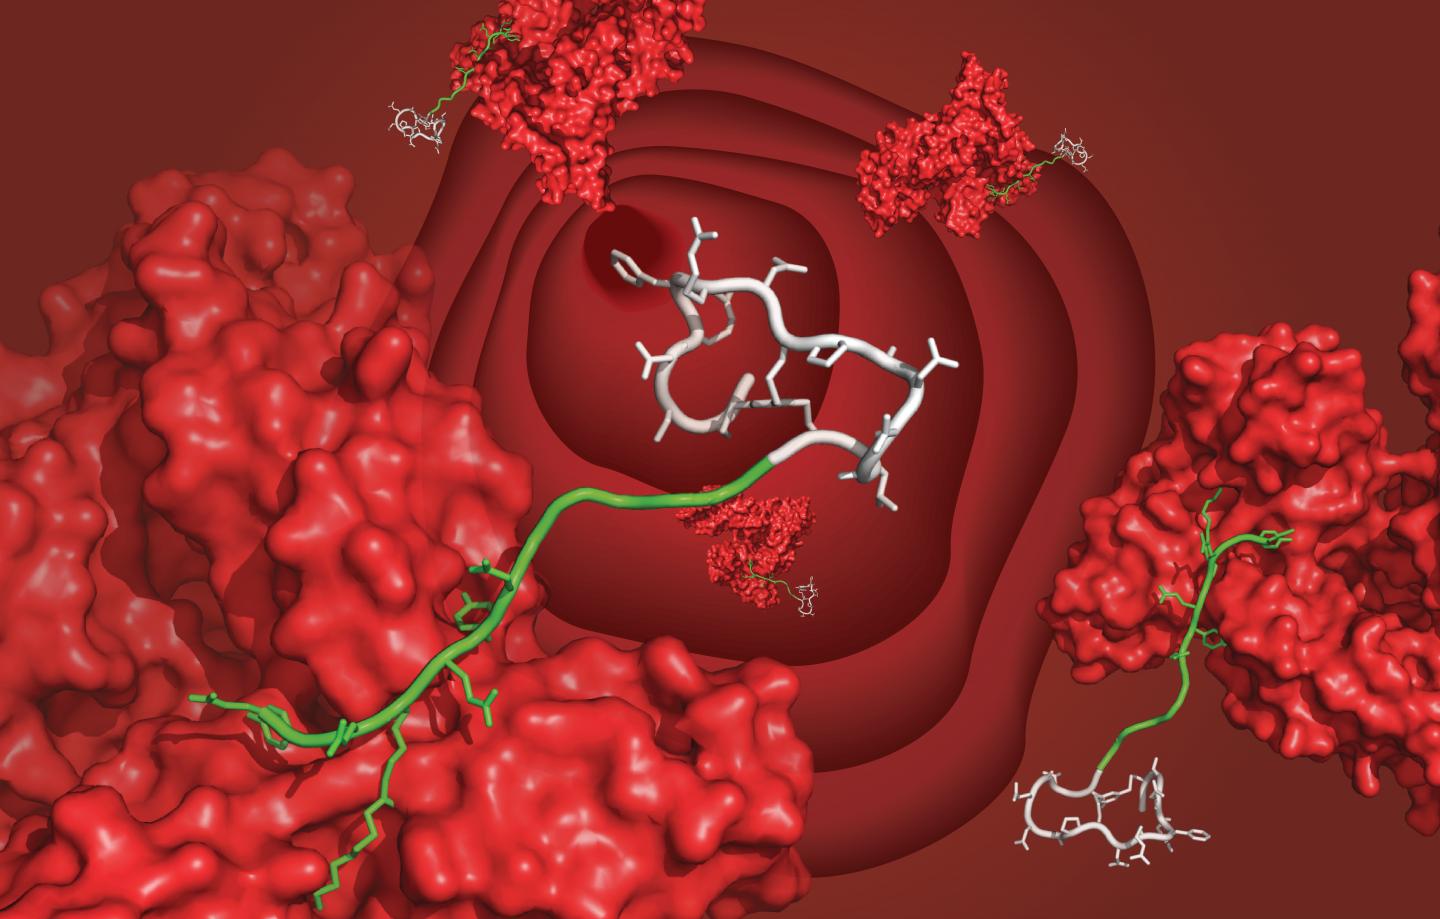 Illustration of the Developed Peptide